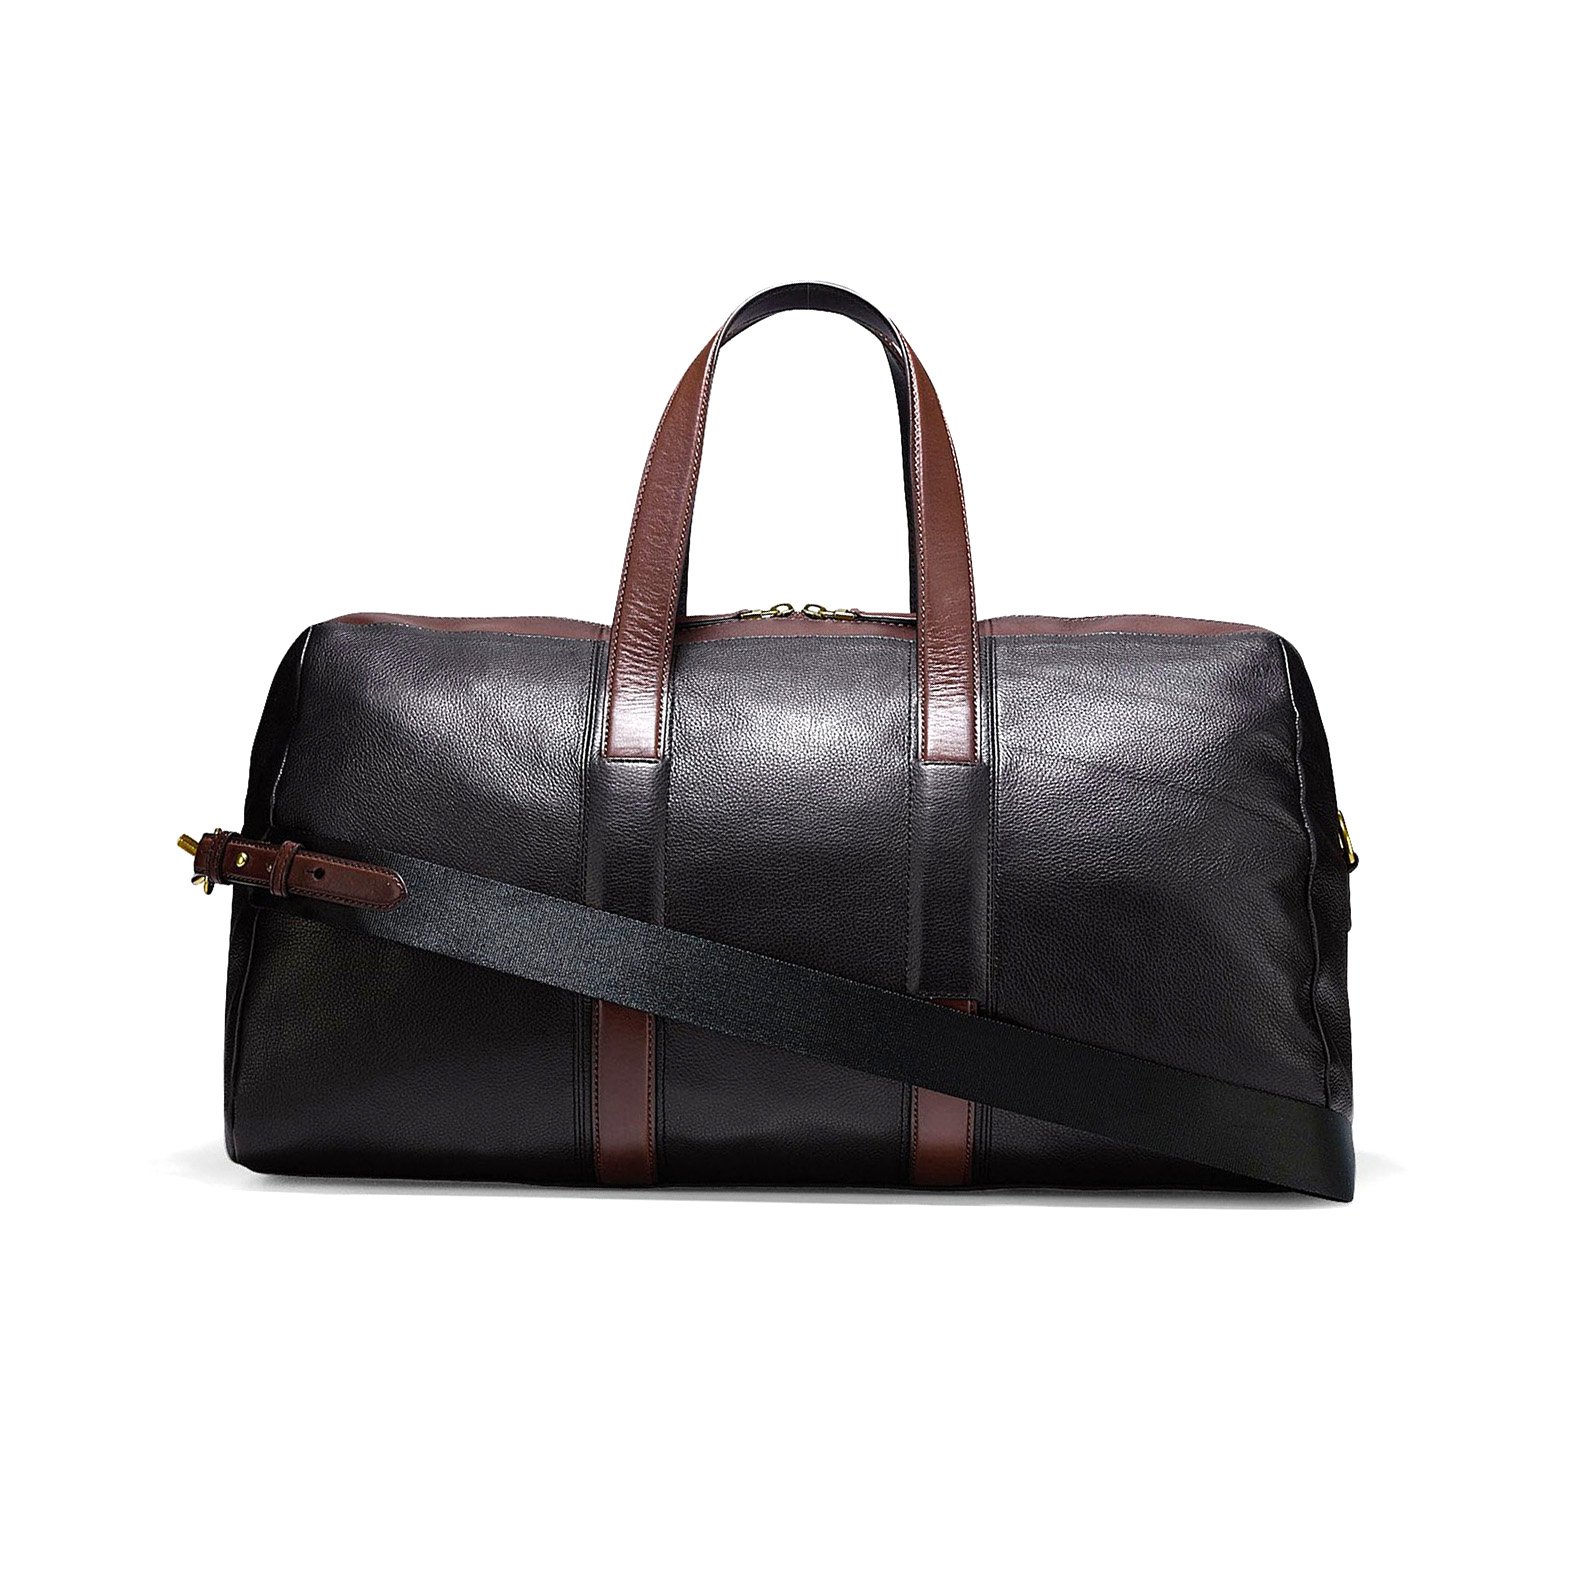 Dark Brown Leather Duffle Bag Best Design